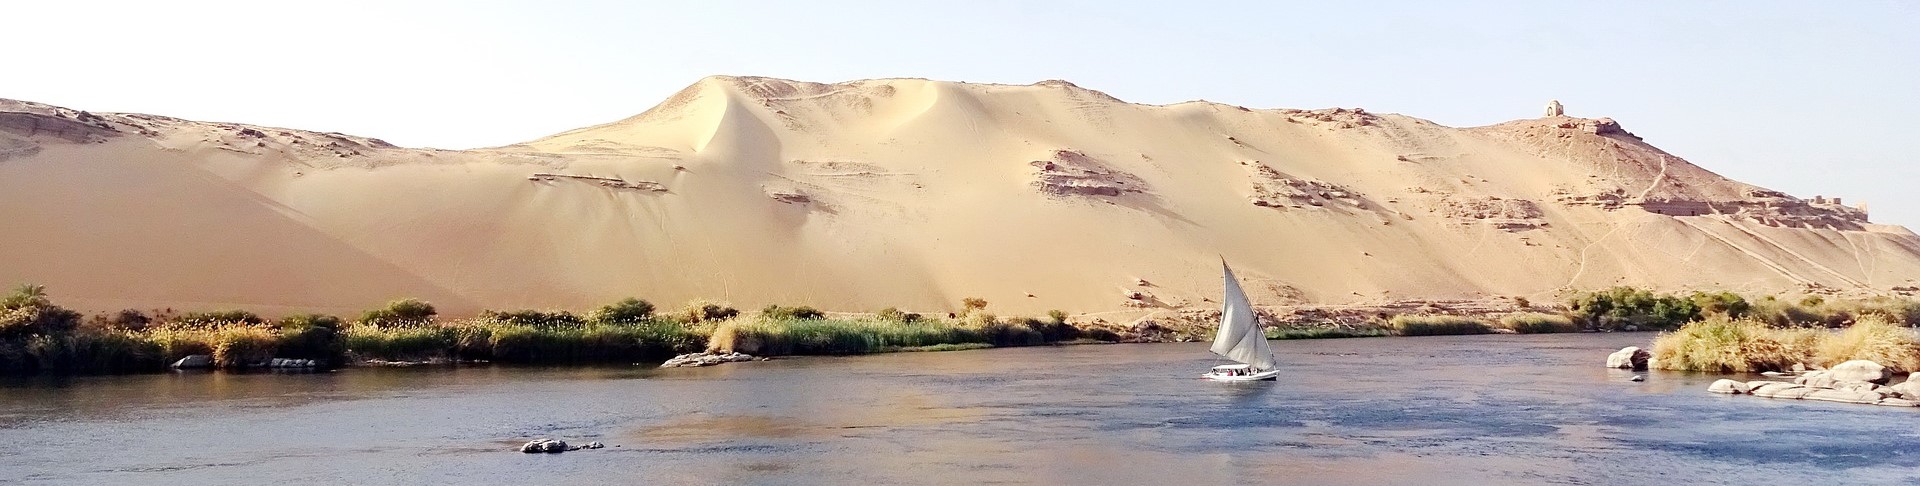 Aswan REPORT|アスワン 視察ブログ